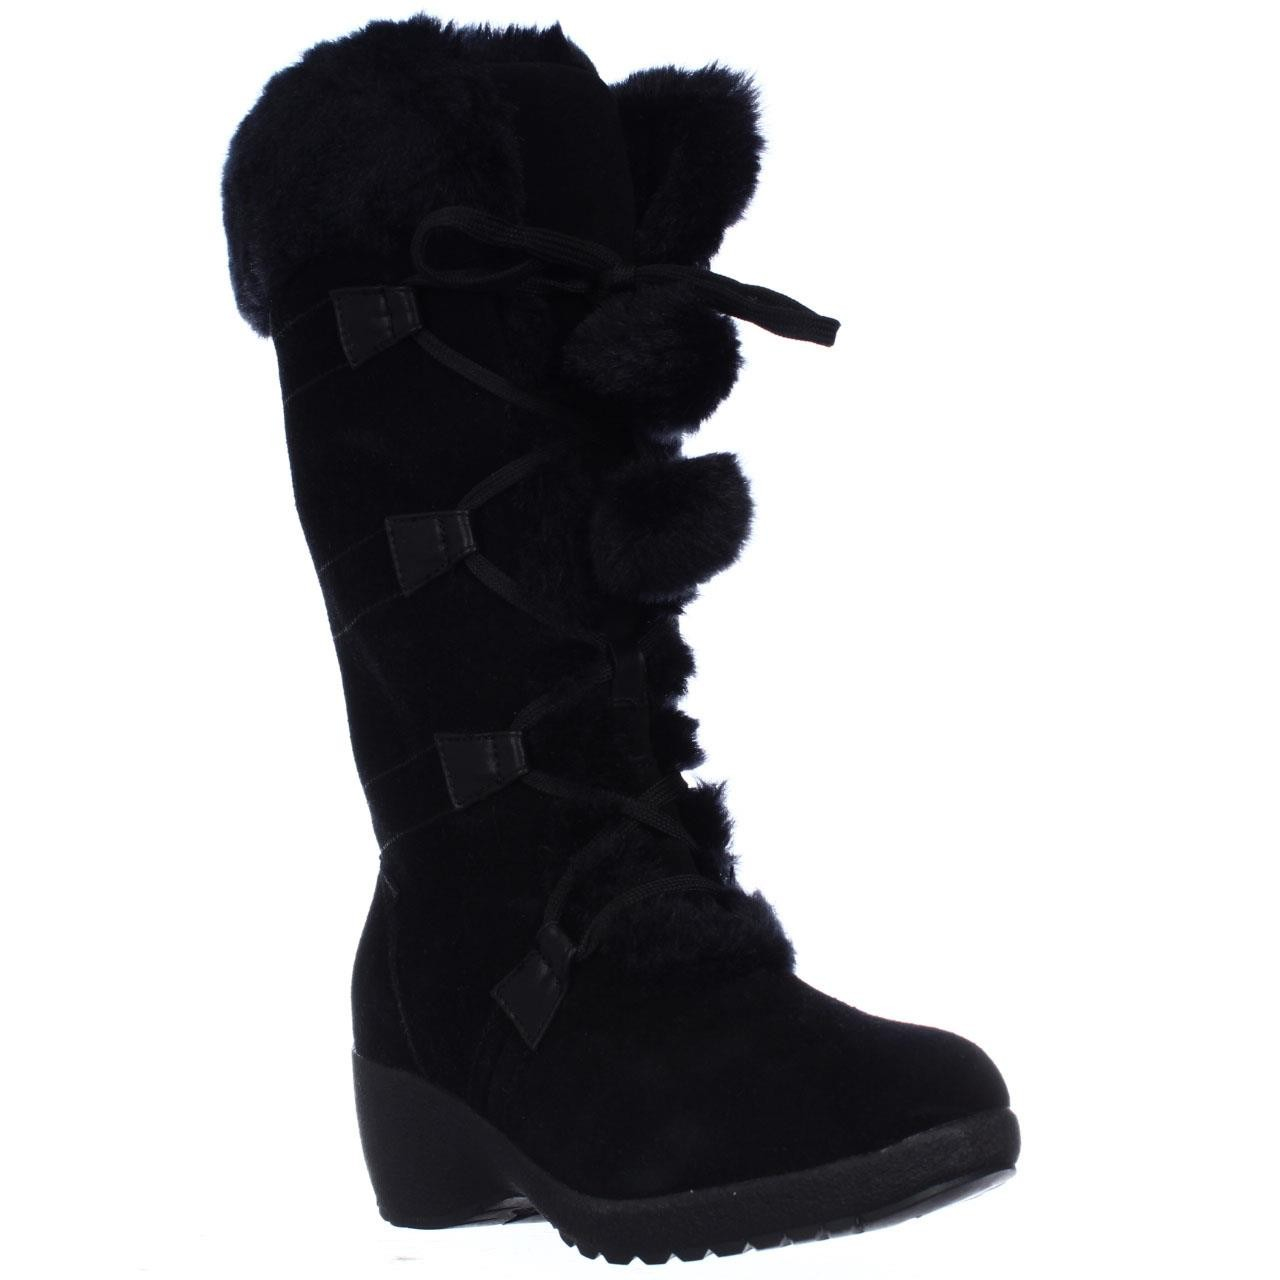 Sporto Megan Wedge Lace Up Waterproof Winter Boots in Black - Lyst